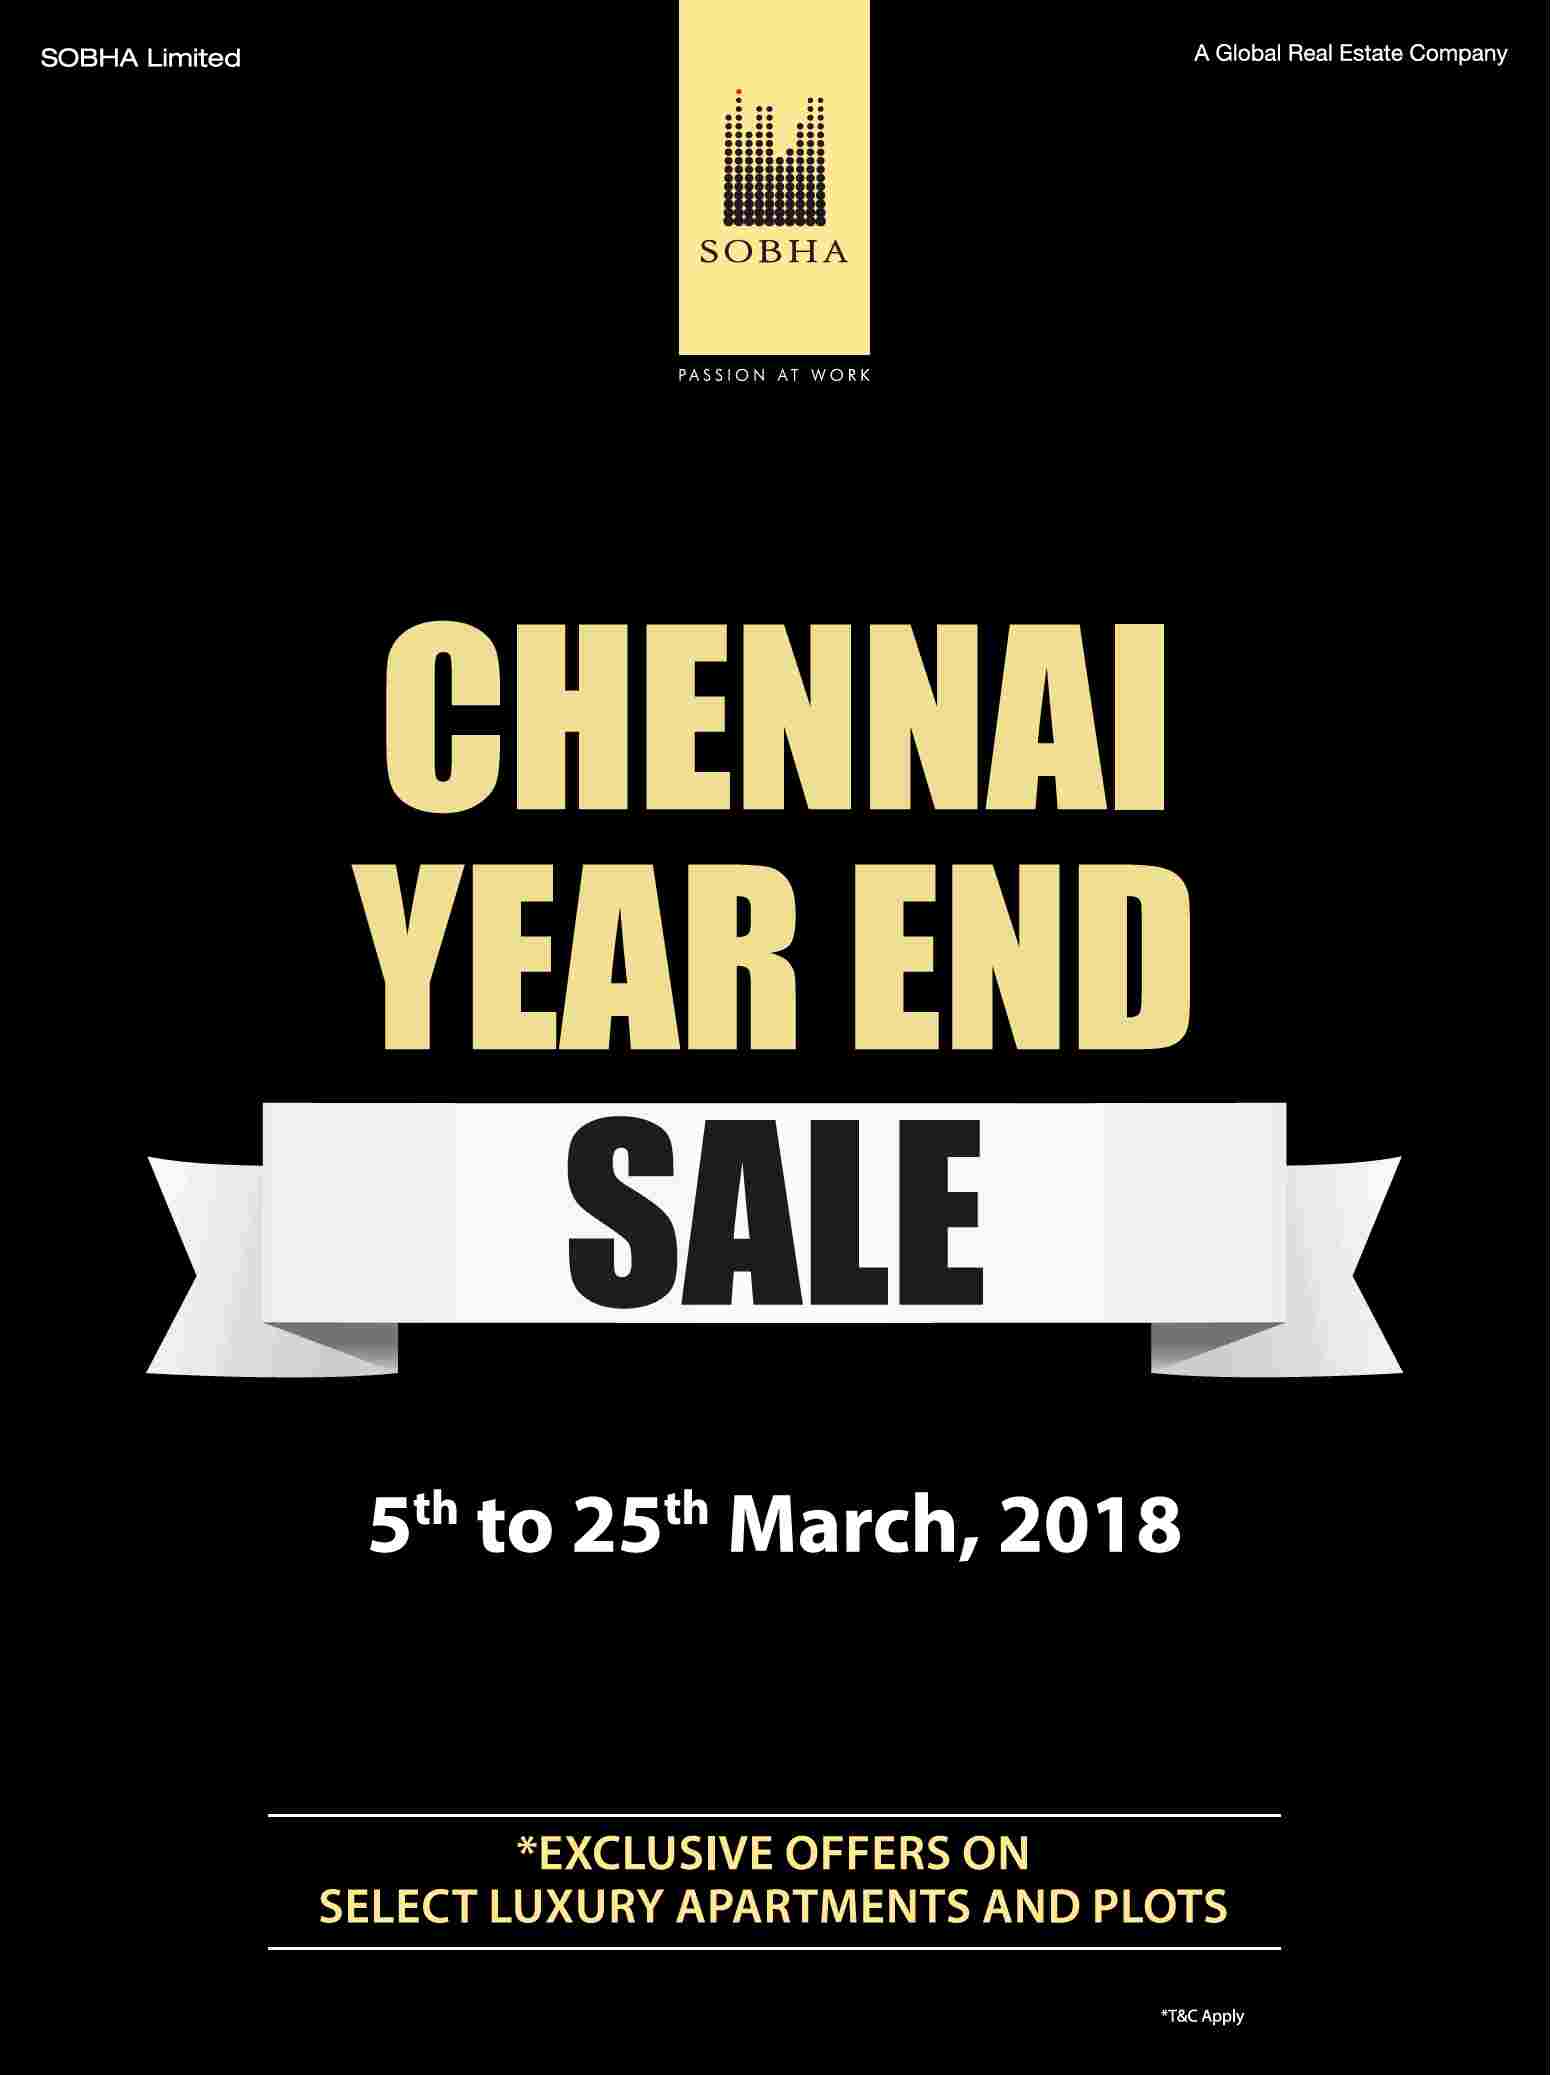 Sobha presents Chennai Year End Sale 2018 Update